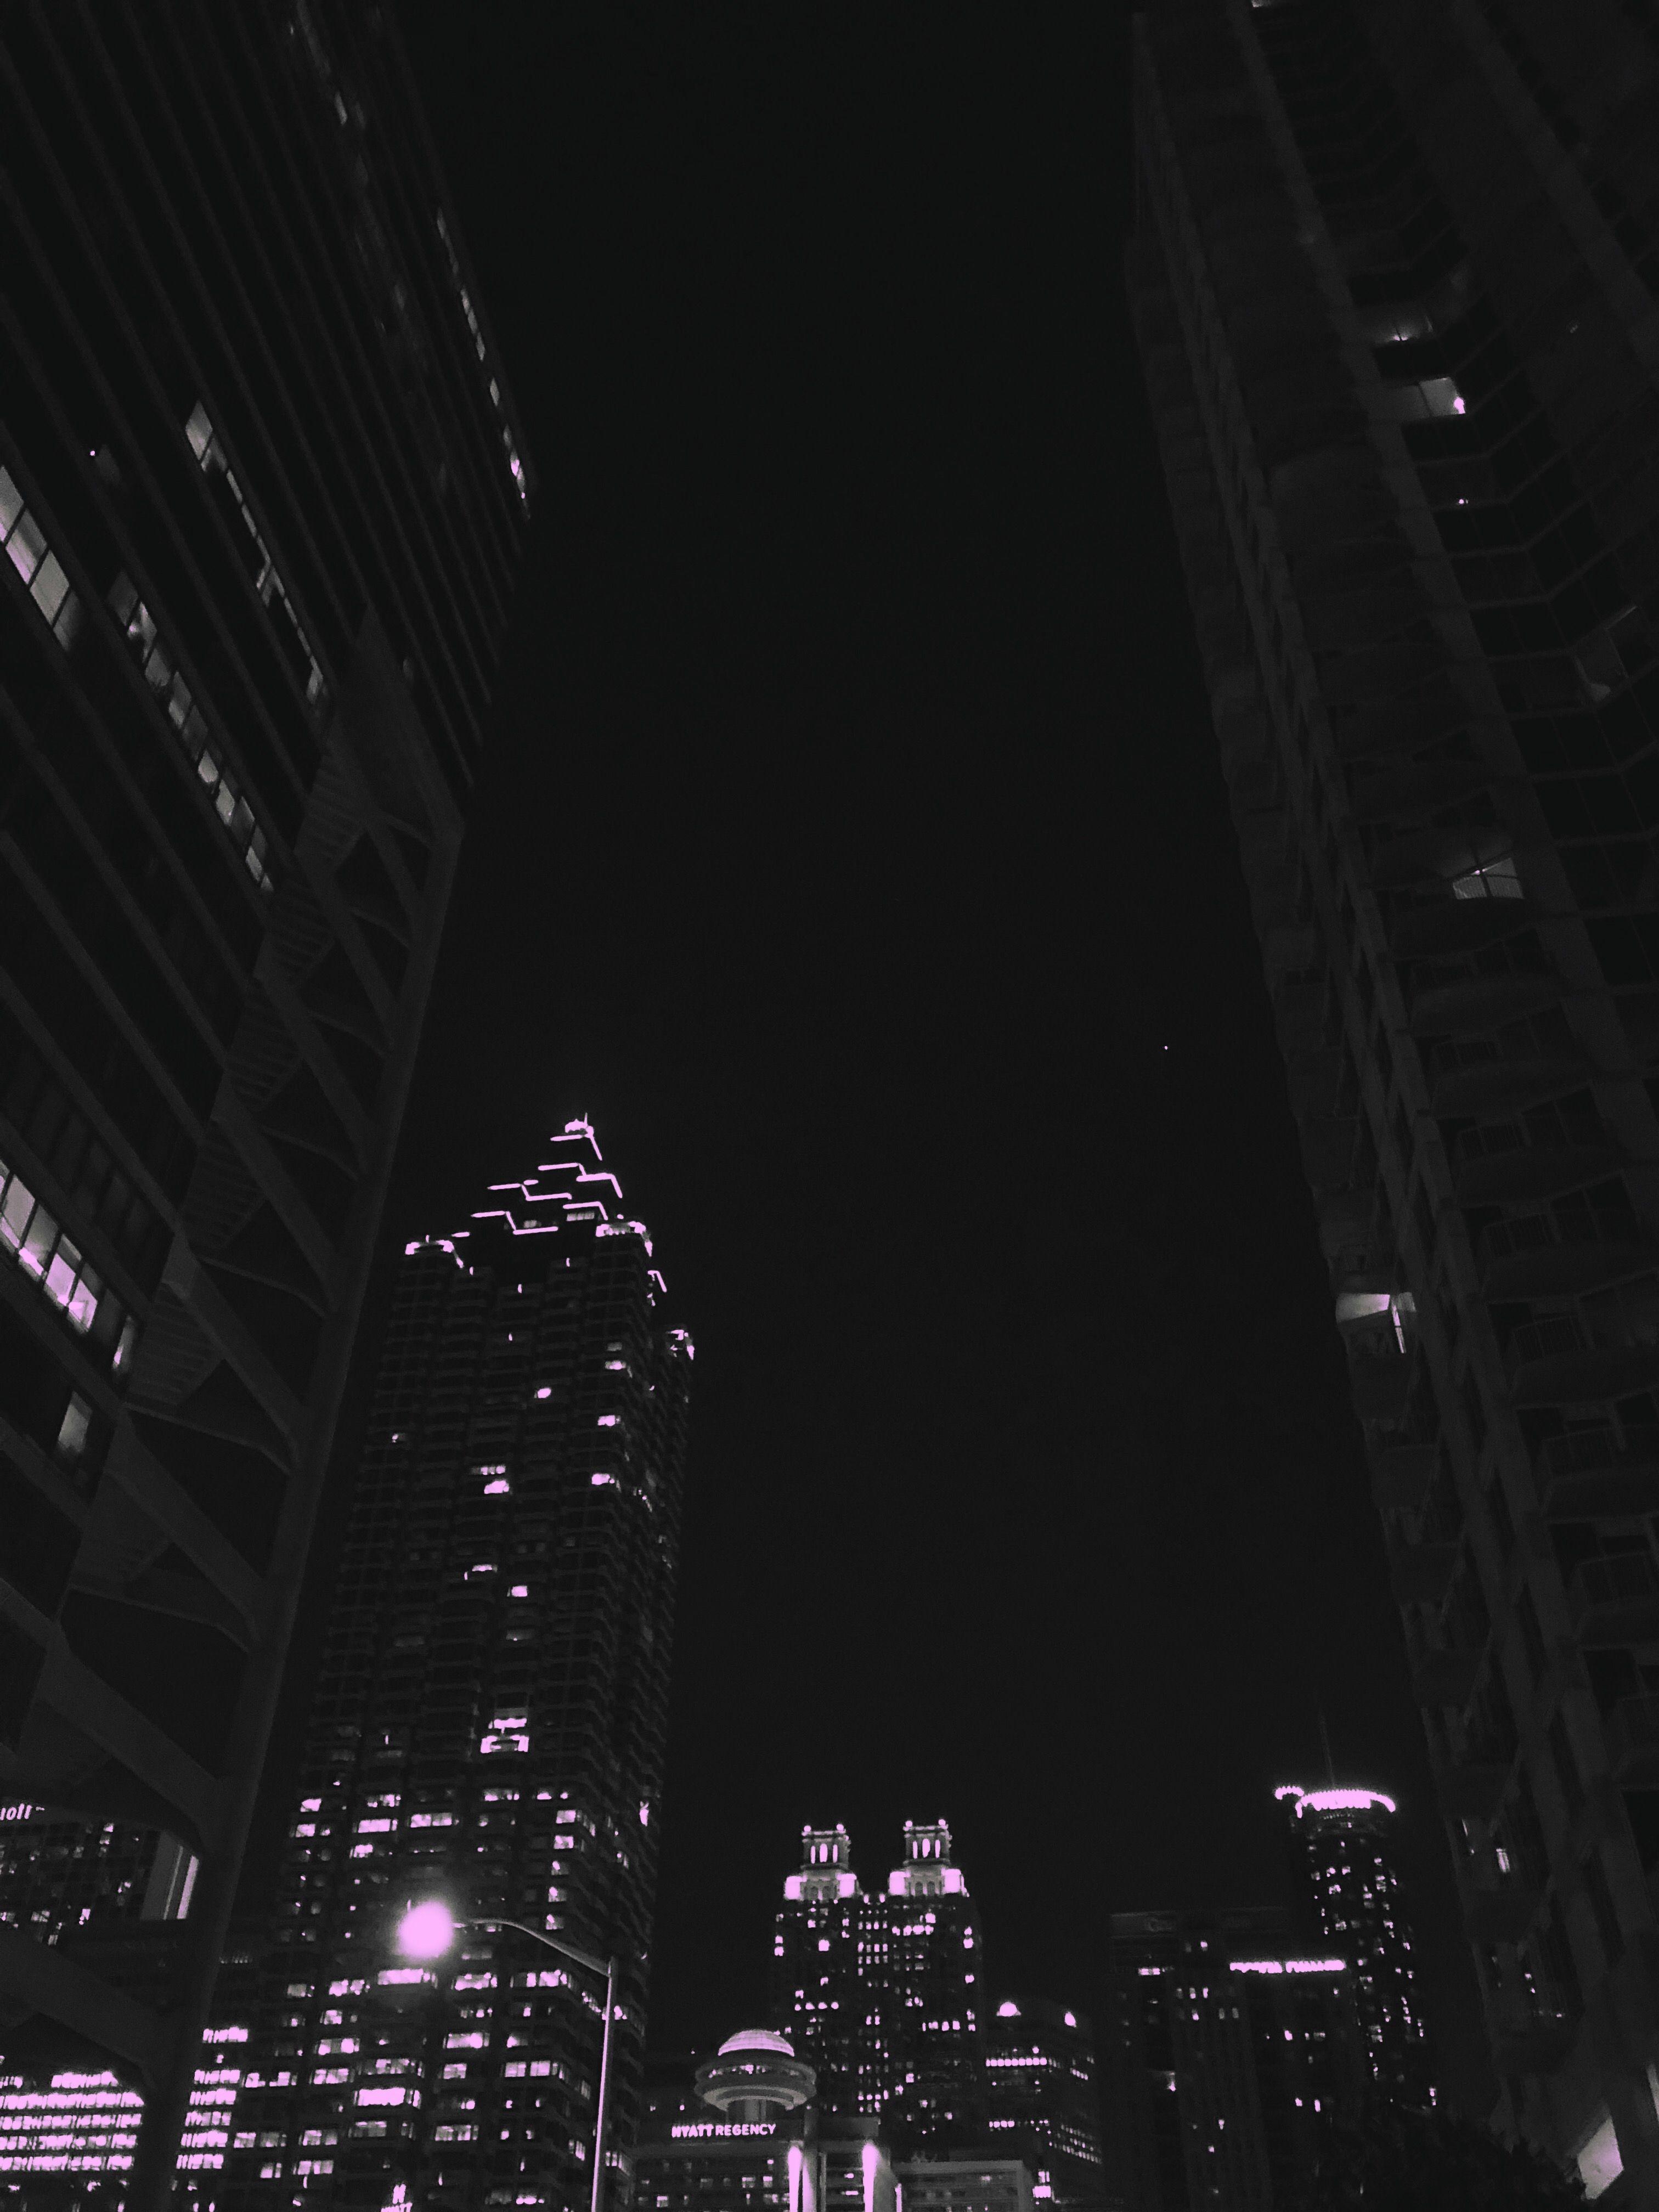 City night lights pink purple black and white background